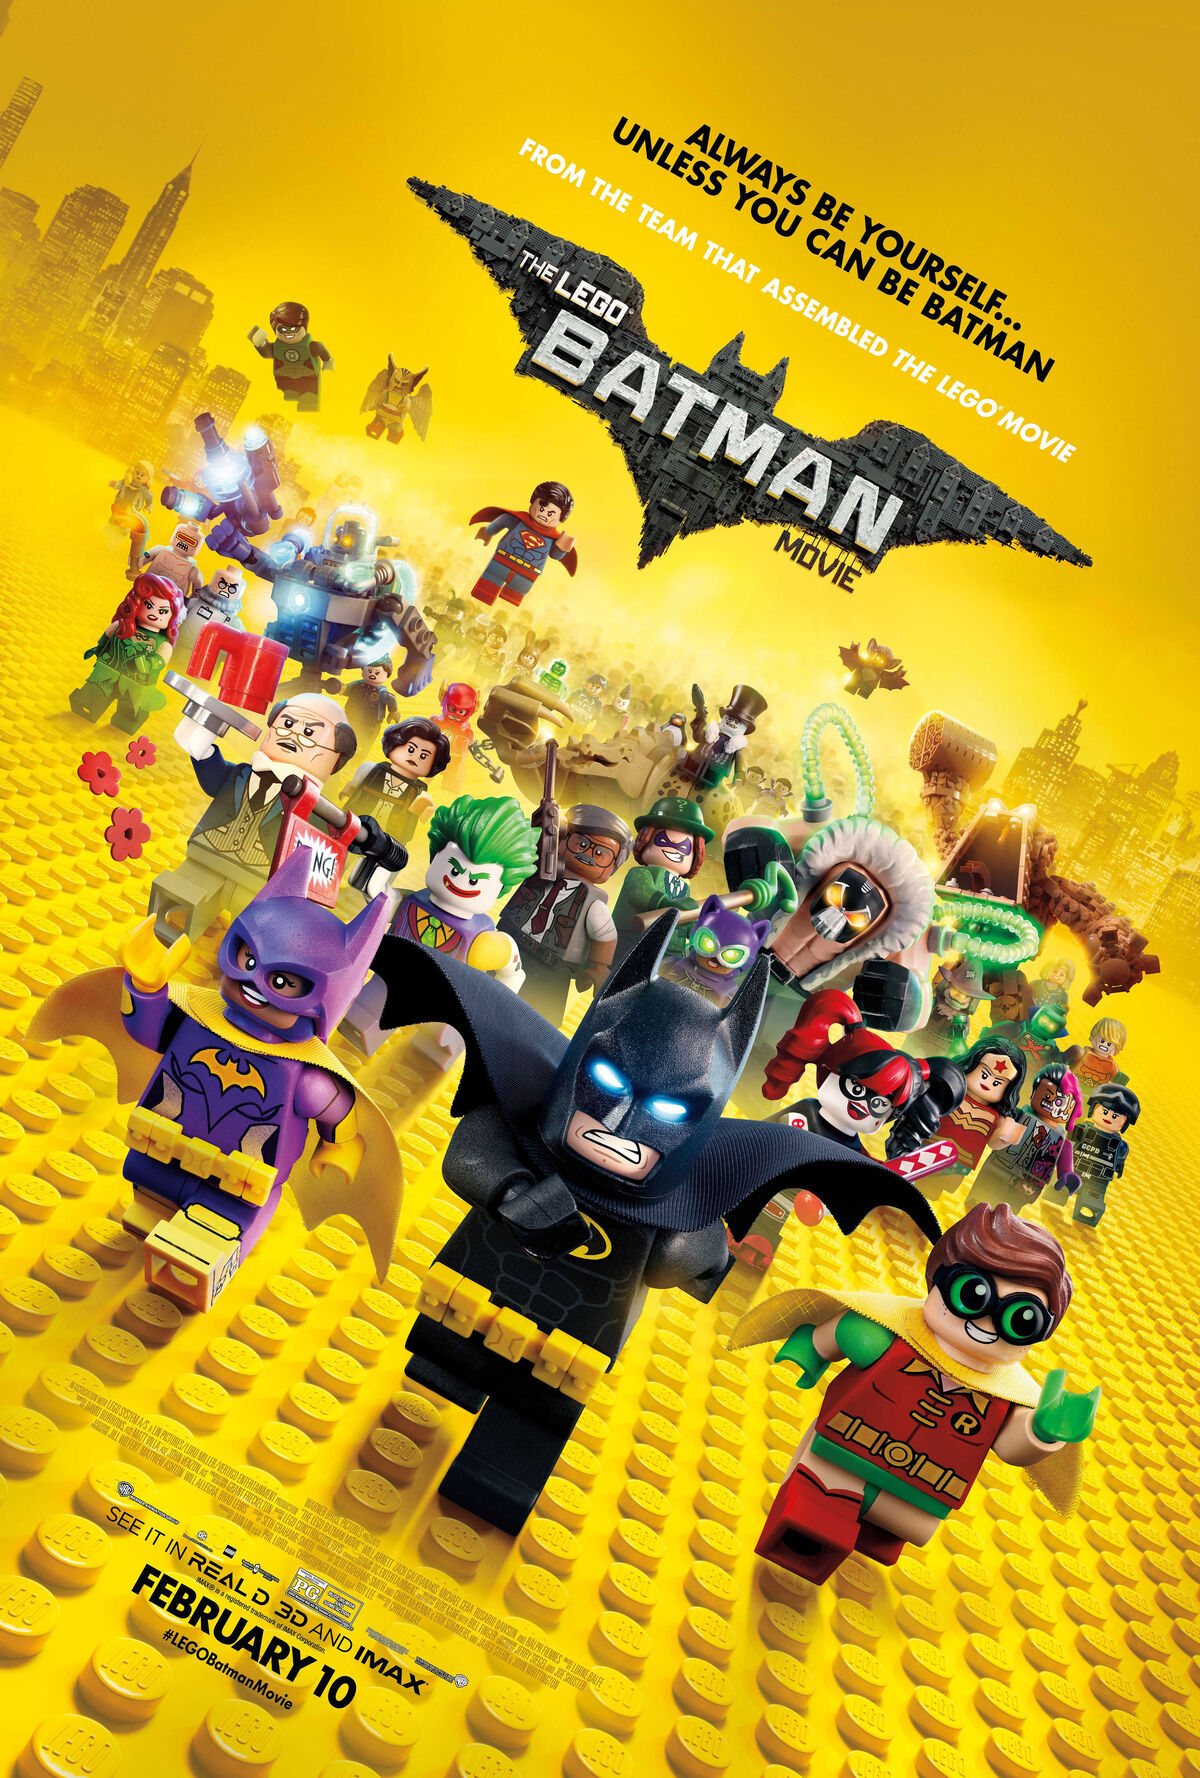 Lego Batman Movie trailer is the perfect antidote to Batman v